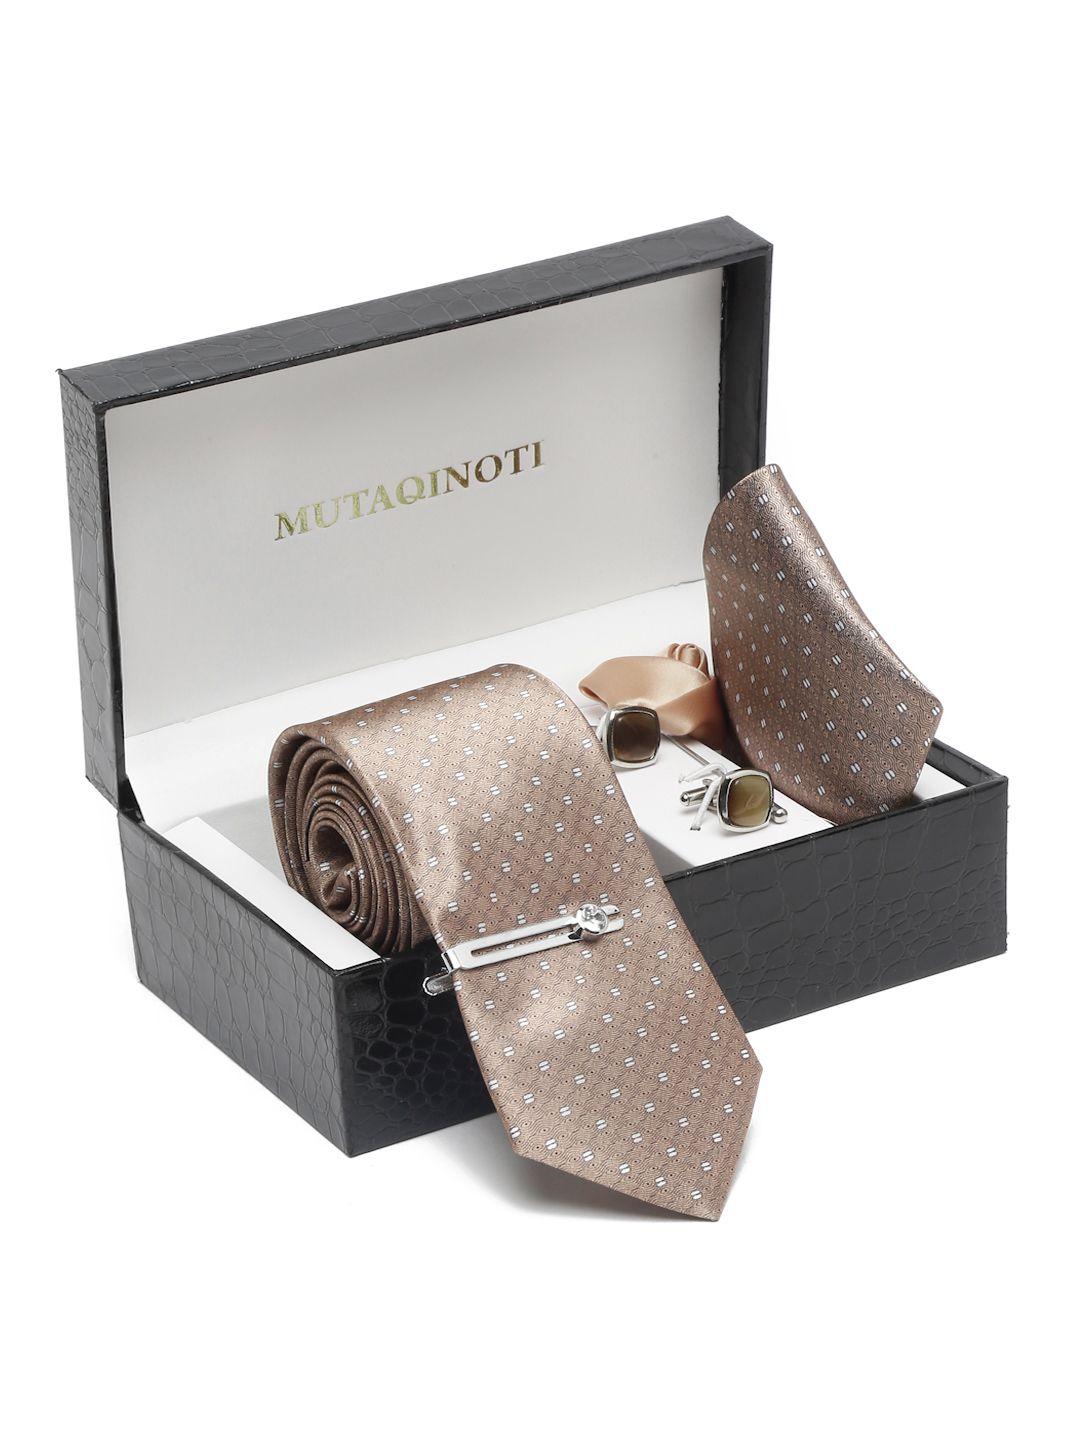 mutaqinoti men printed necktie accessory gift set